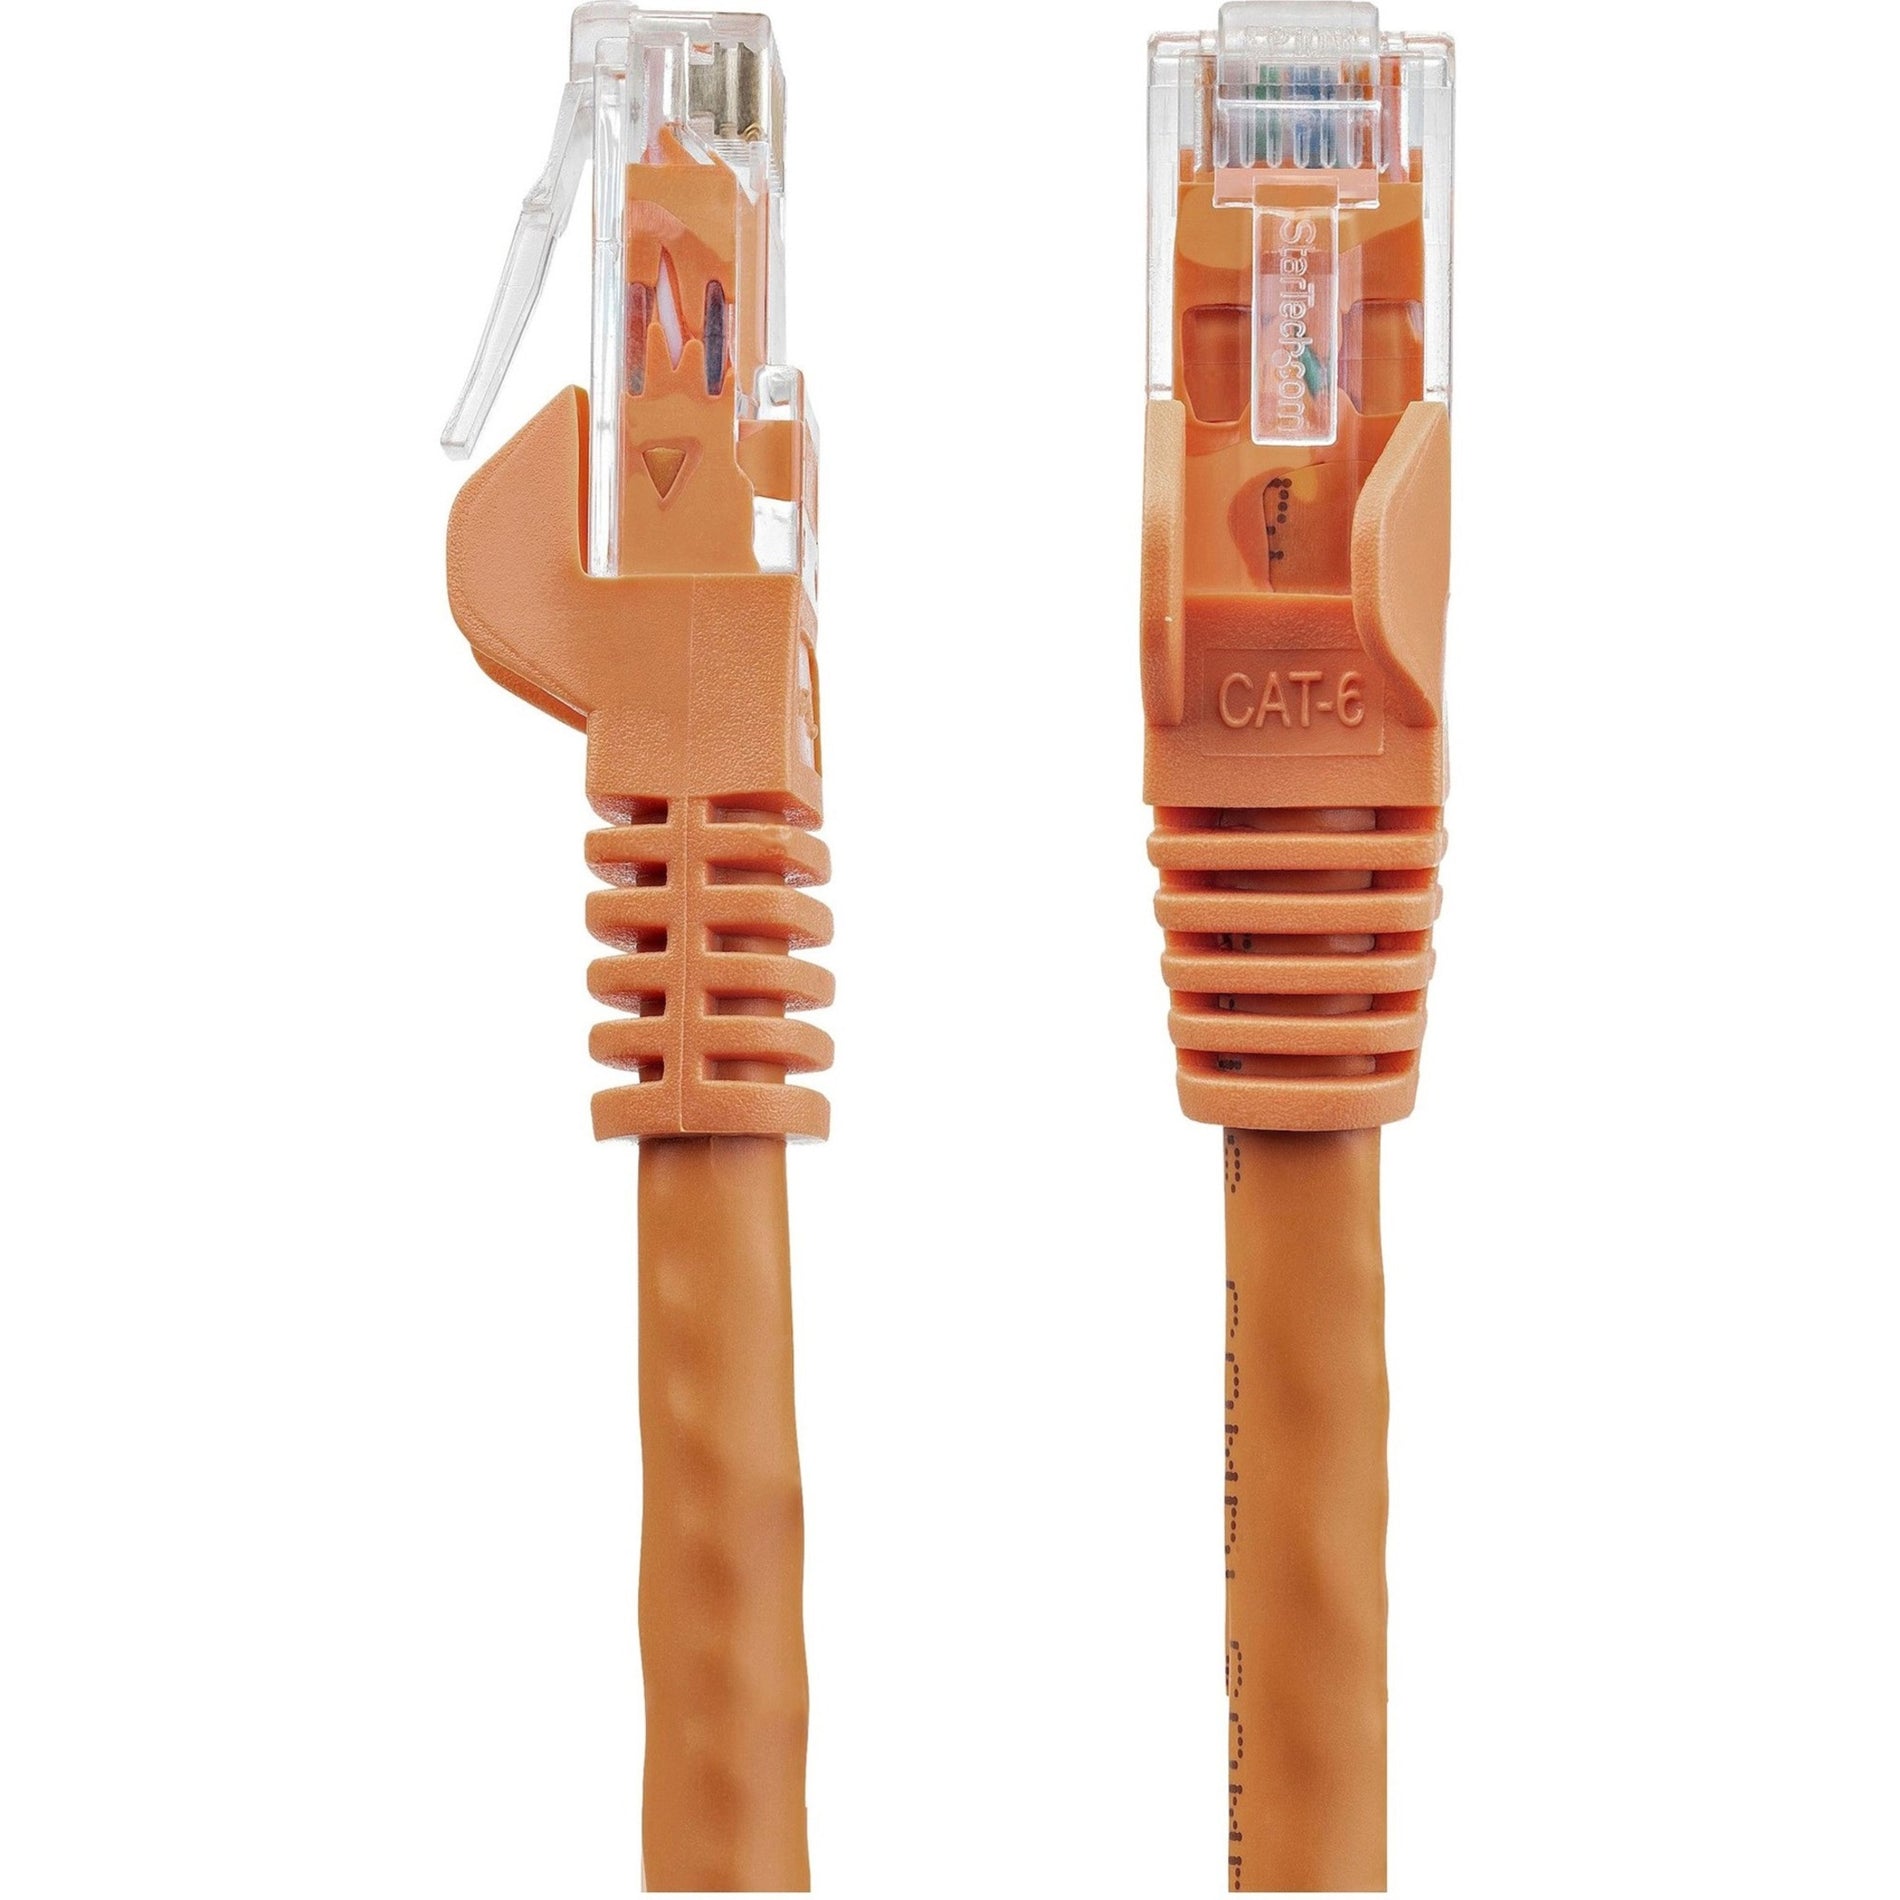 StarTech.com N6PATCH6OR Cat6 Patch Cable, 6 ft Orange Ethernet Cable, Snagless RJ45 Connectors